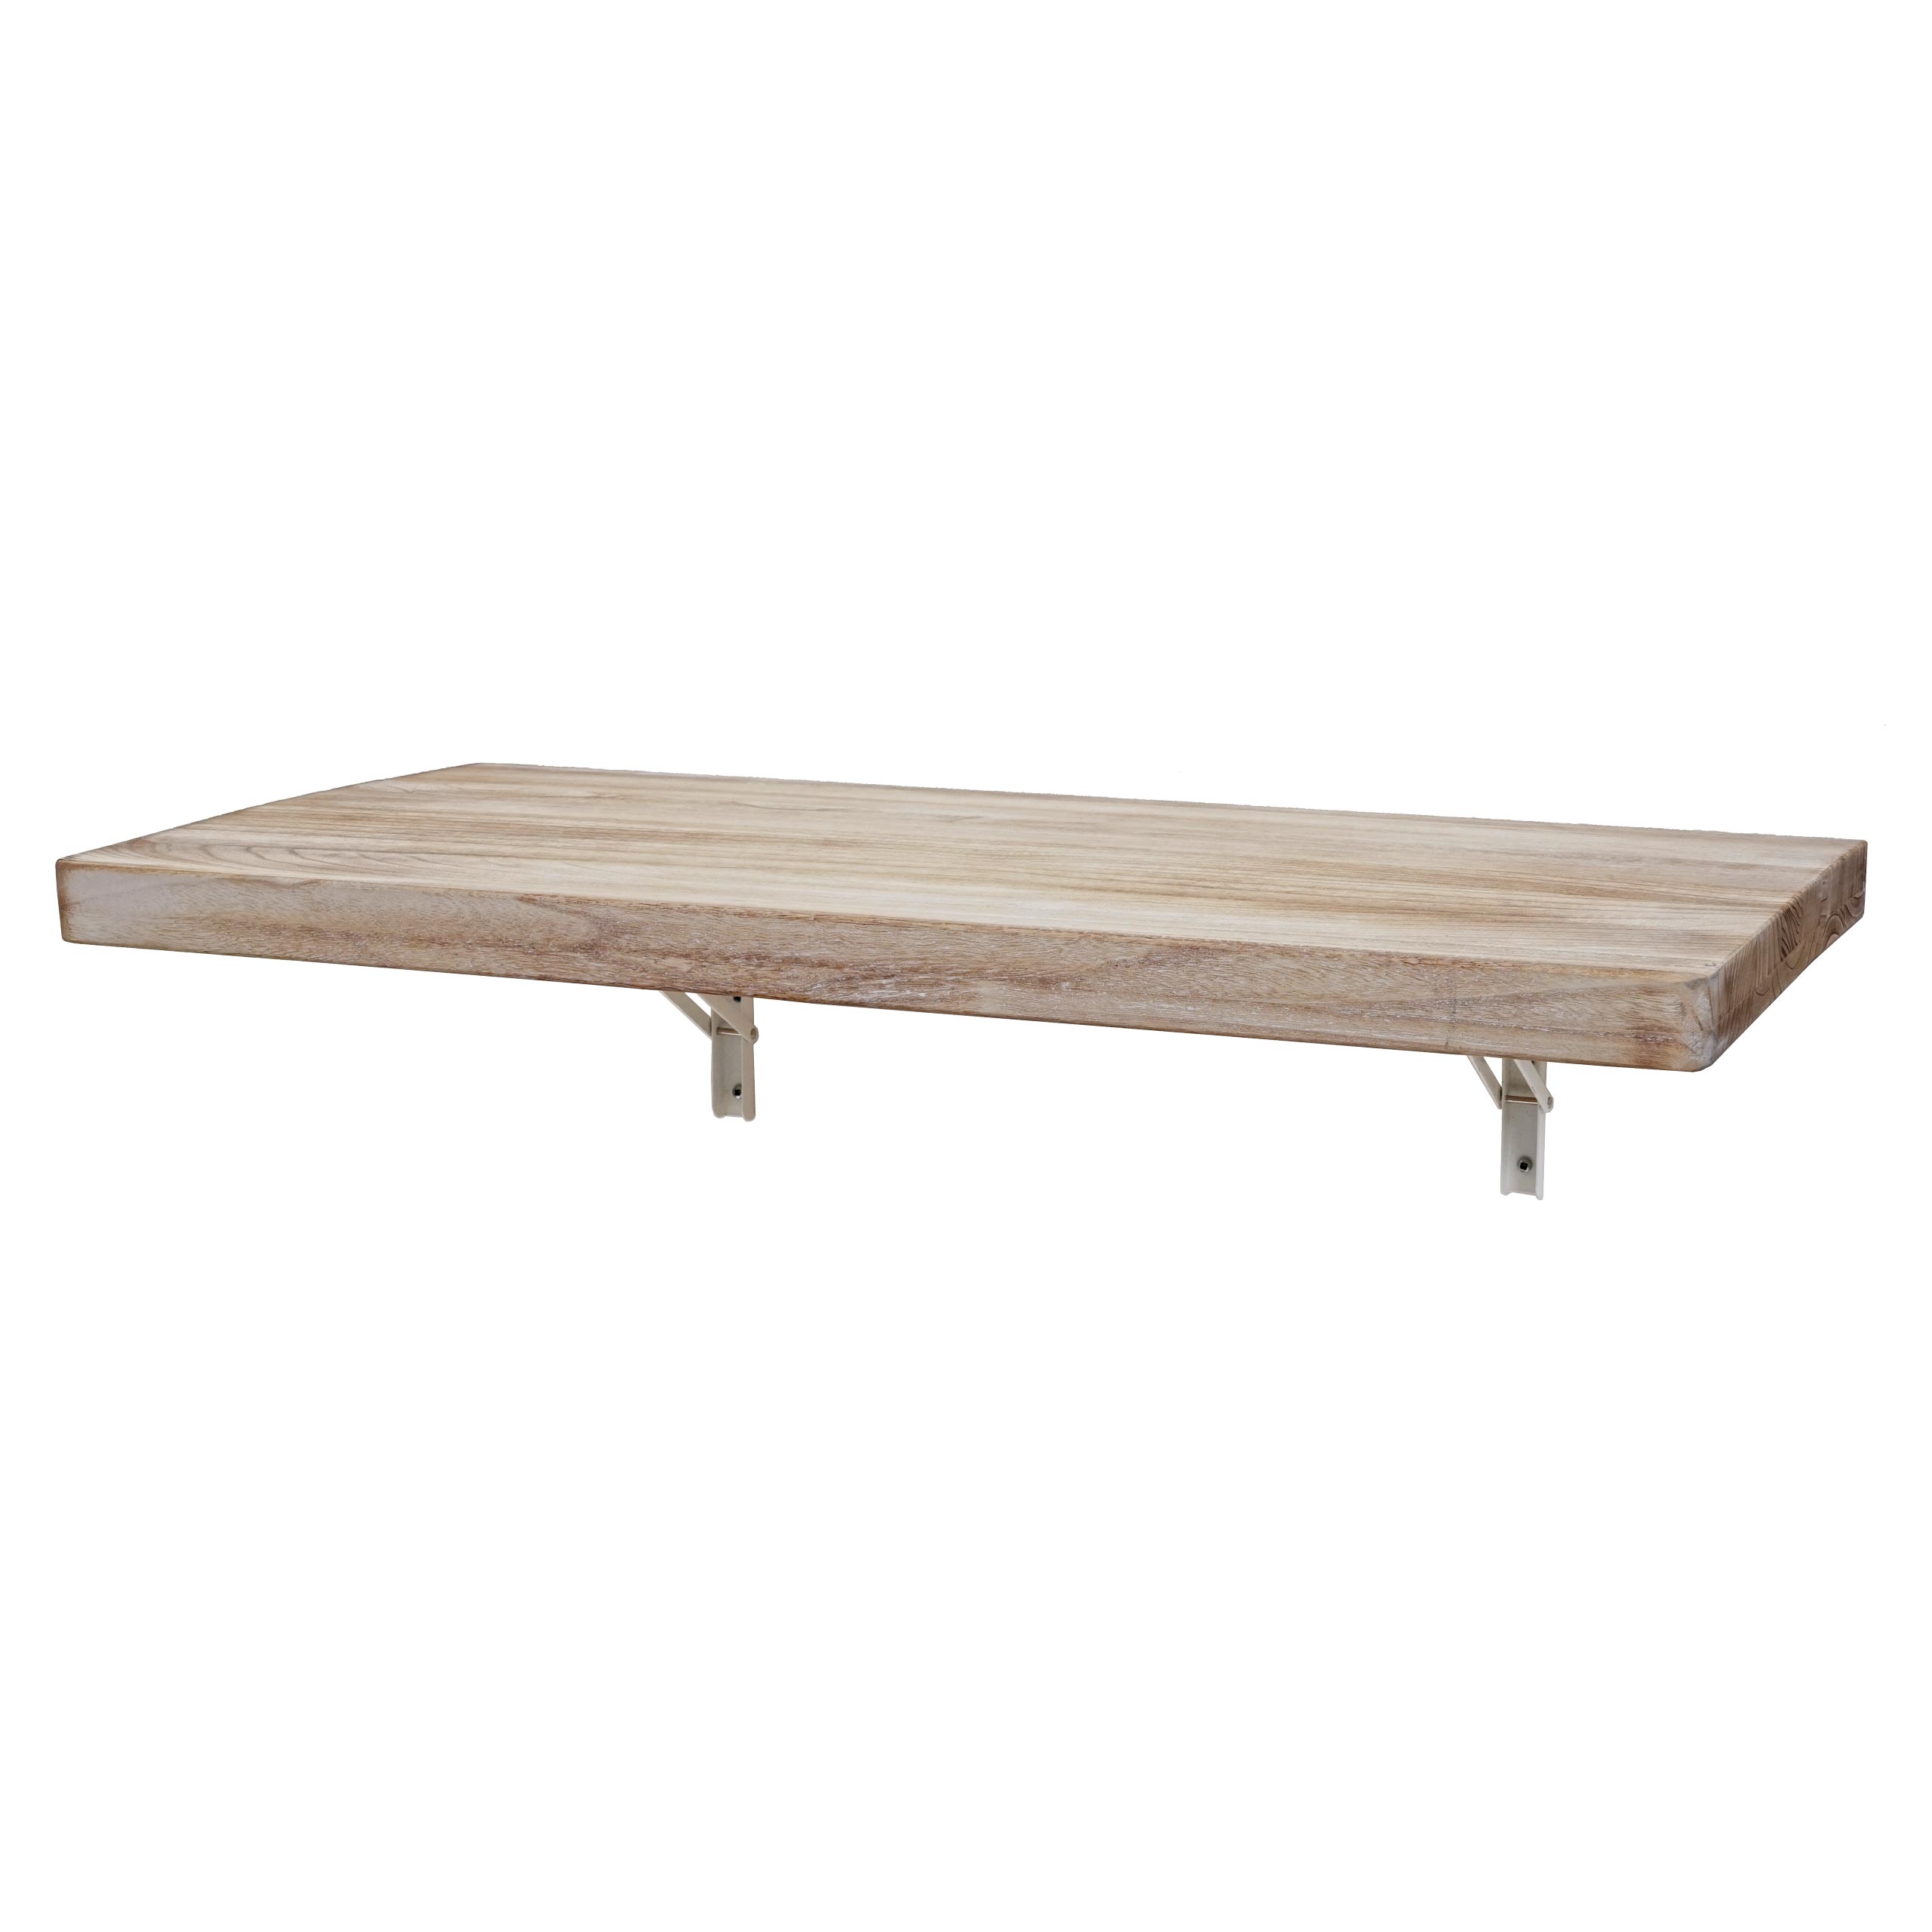 Wandtisch HWC-H48, Wandklapptisch Wandregal Tisch, klappbar Massiv-Holz |  eBay